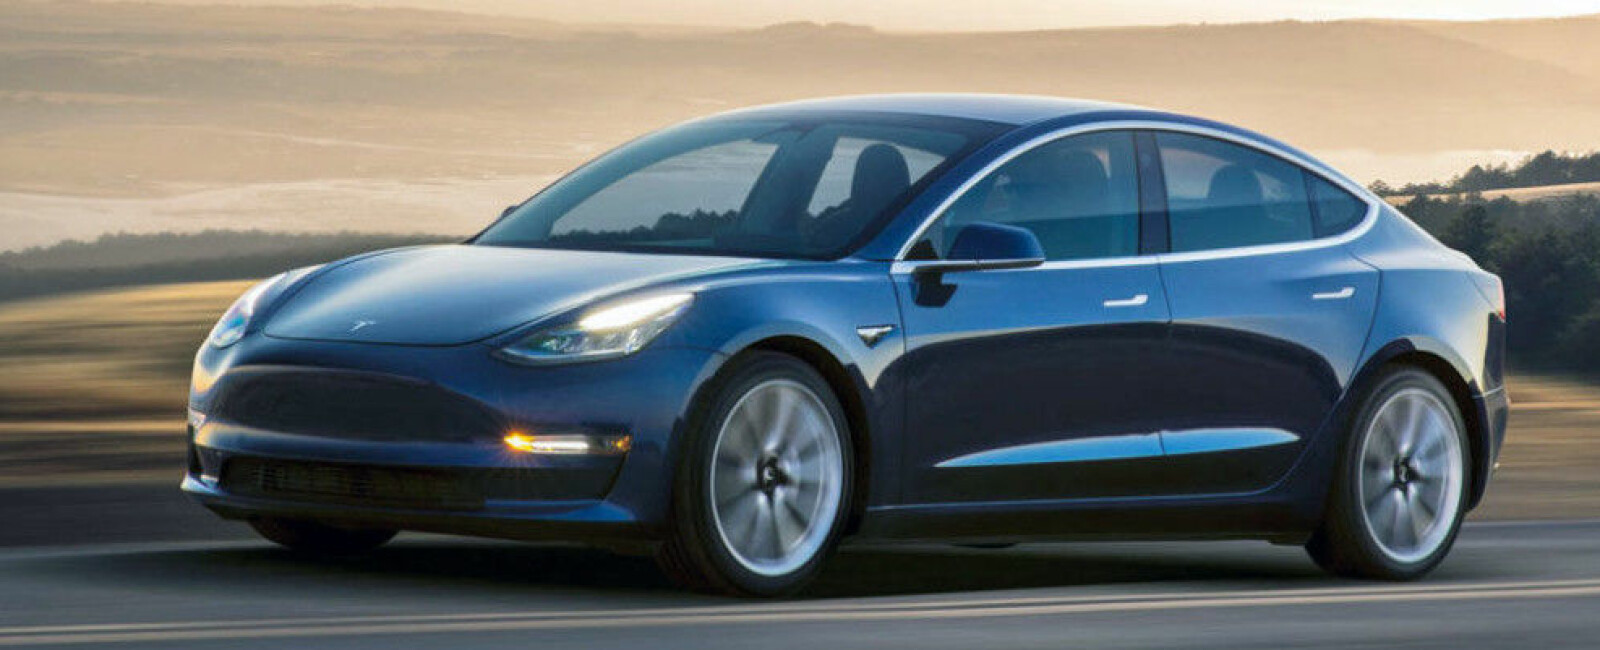 <b>BEGEISTRER:</b> Tesla Model 3 har begeistrede eiere i følge en ny undersøkelse.